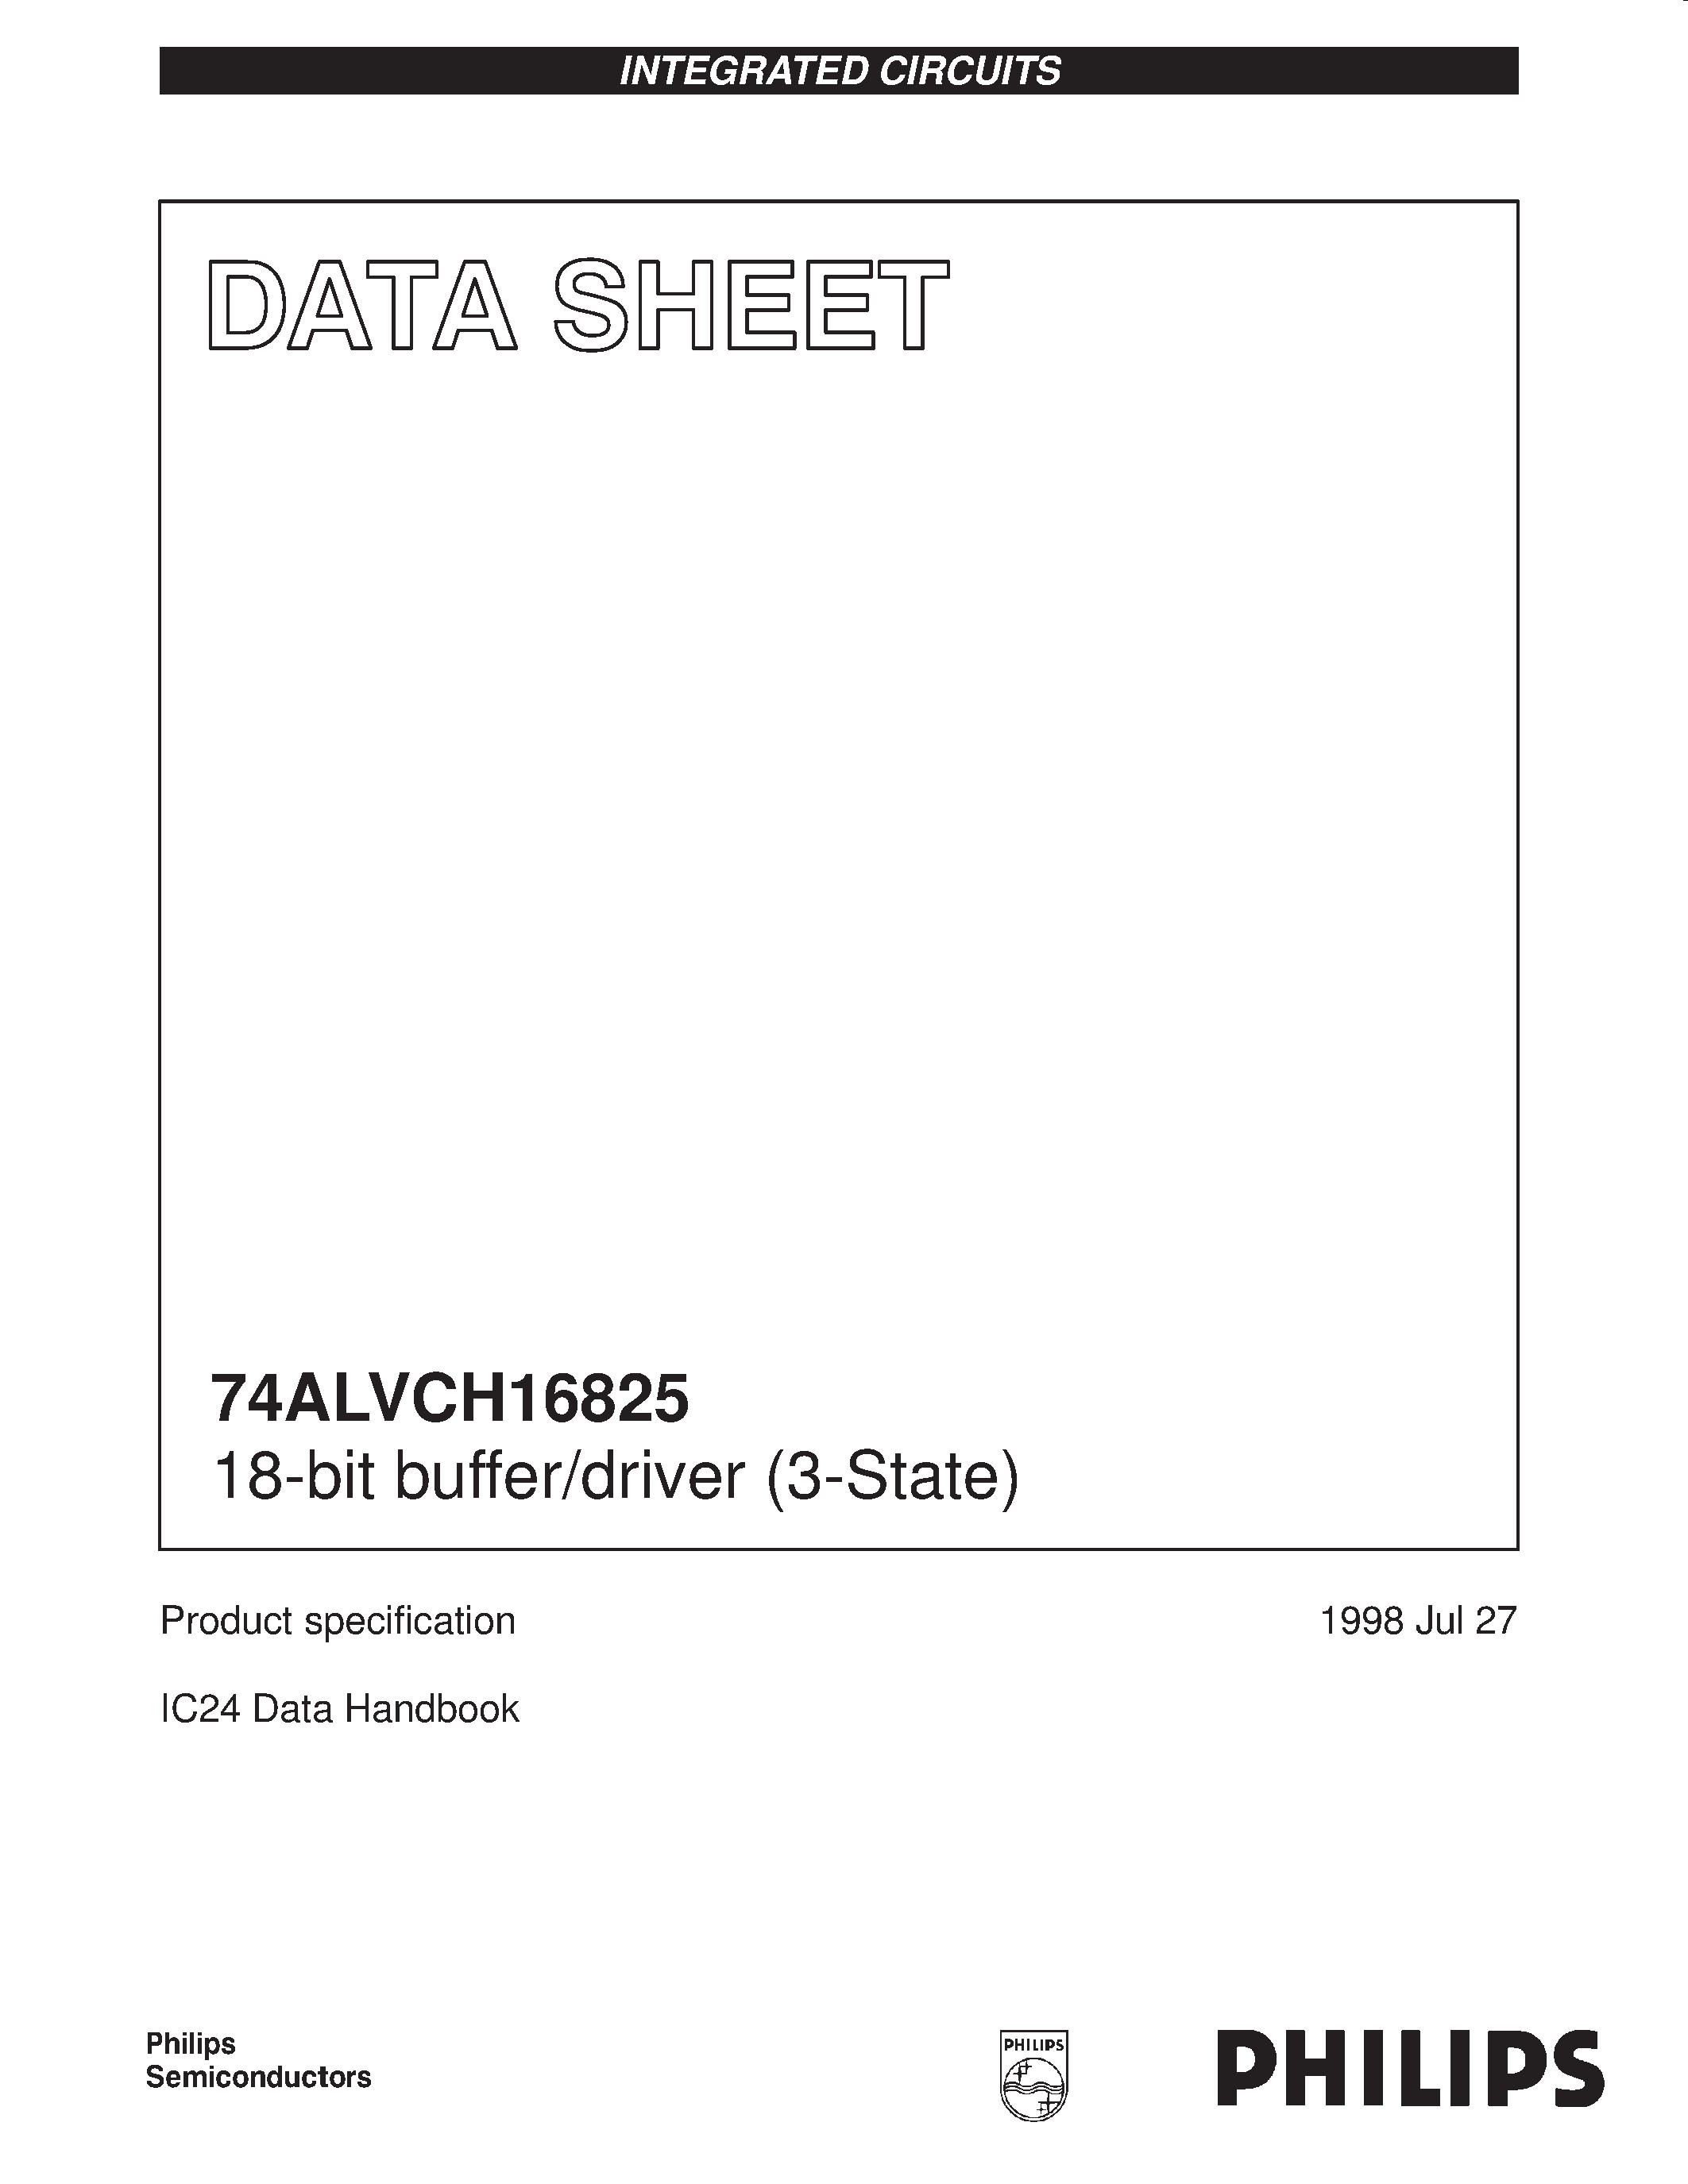 Datasheet 74ALVCH16825DGG - 18-bit buffer/driver 3-State page 1